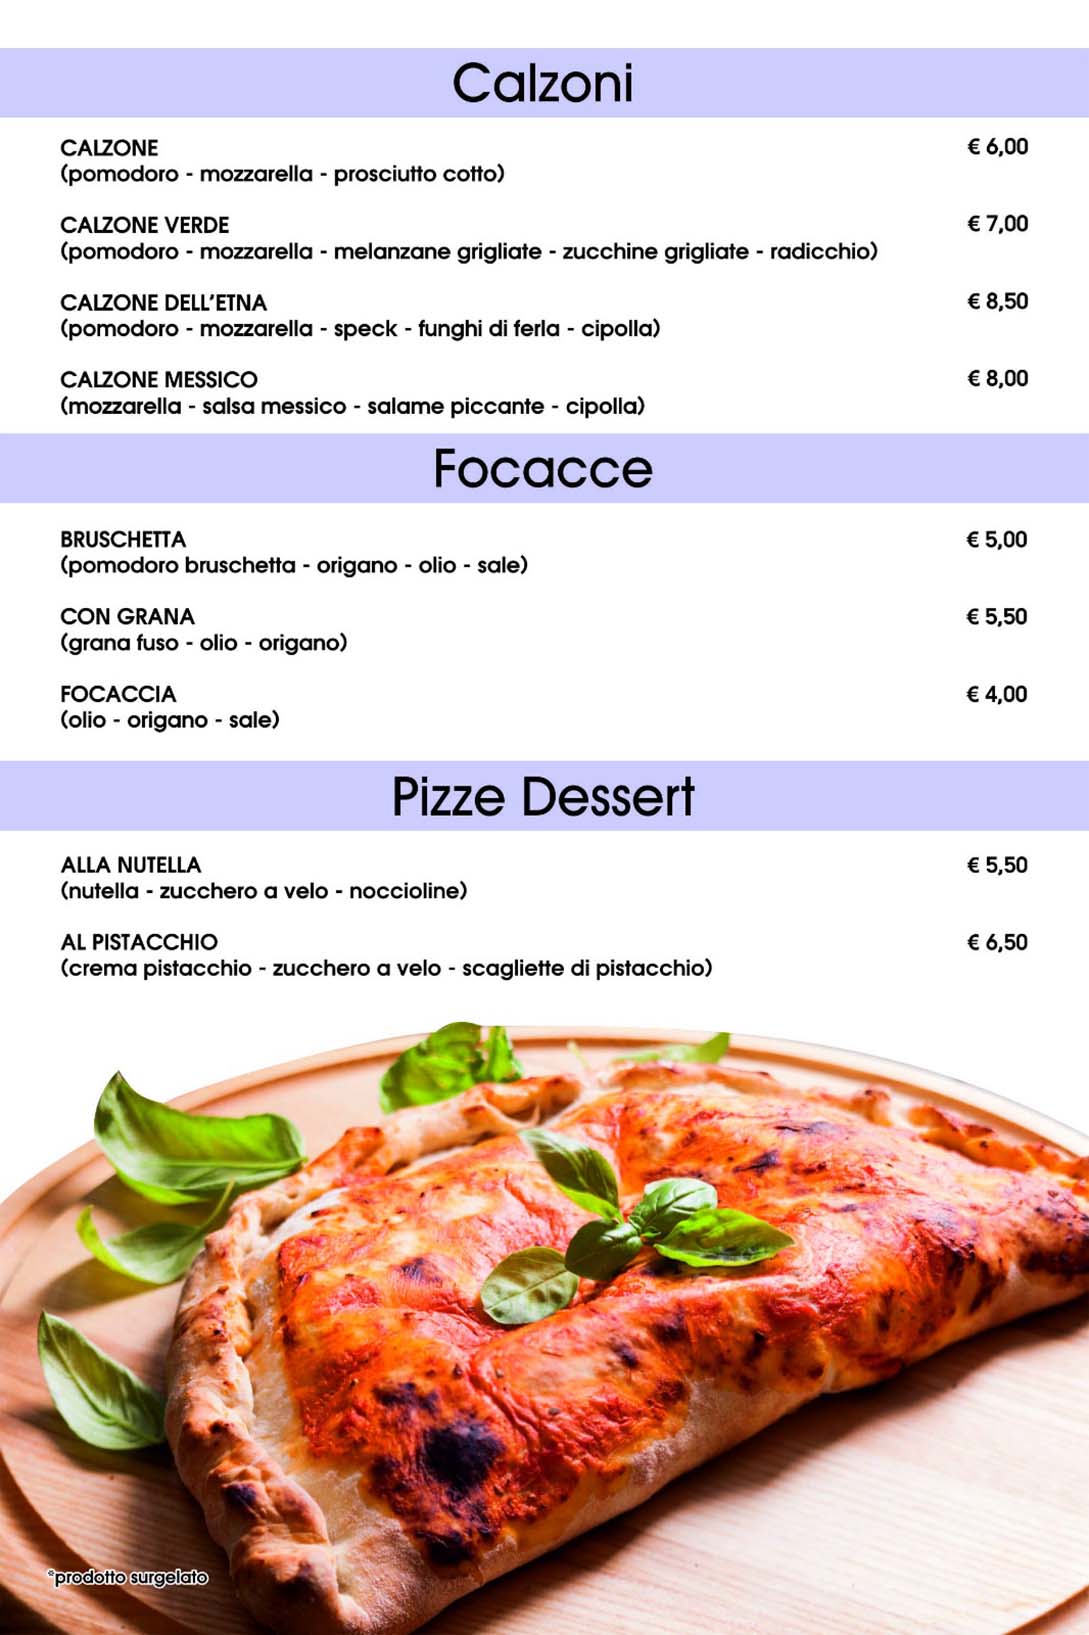 Calzoni - Focacce - Pizze dessert